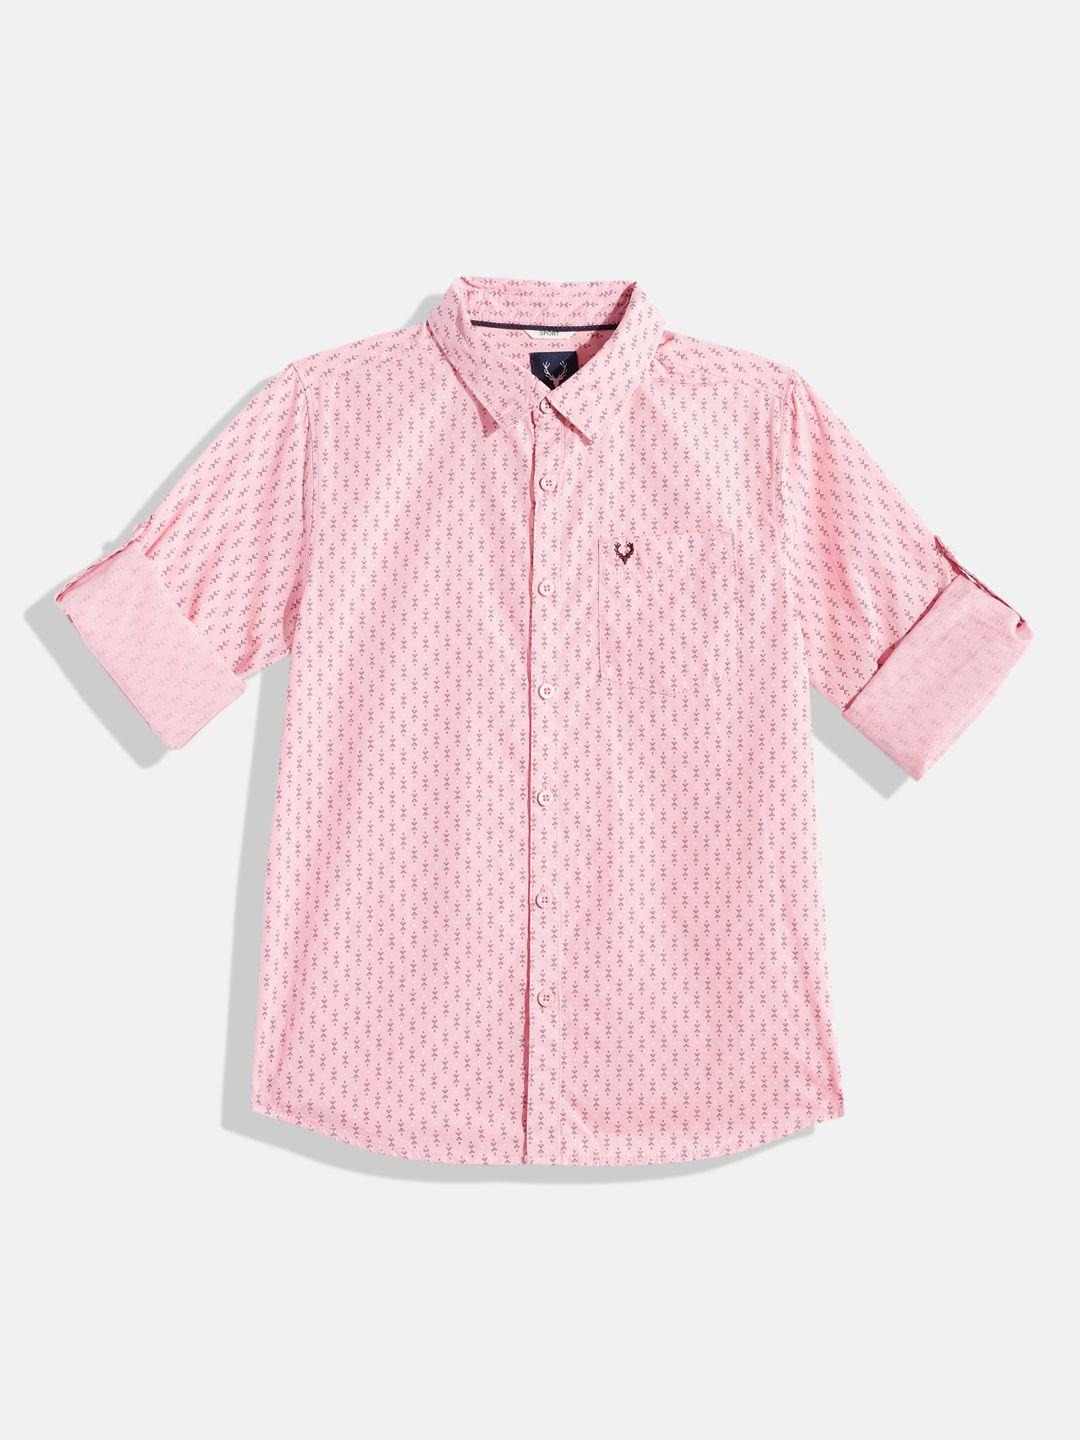 allen solly junior boys sport micro ditsy opaque printed pure cotton casual shirt